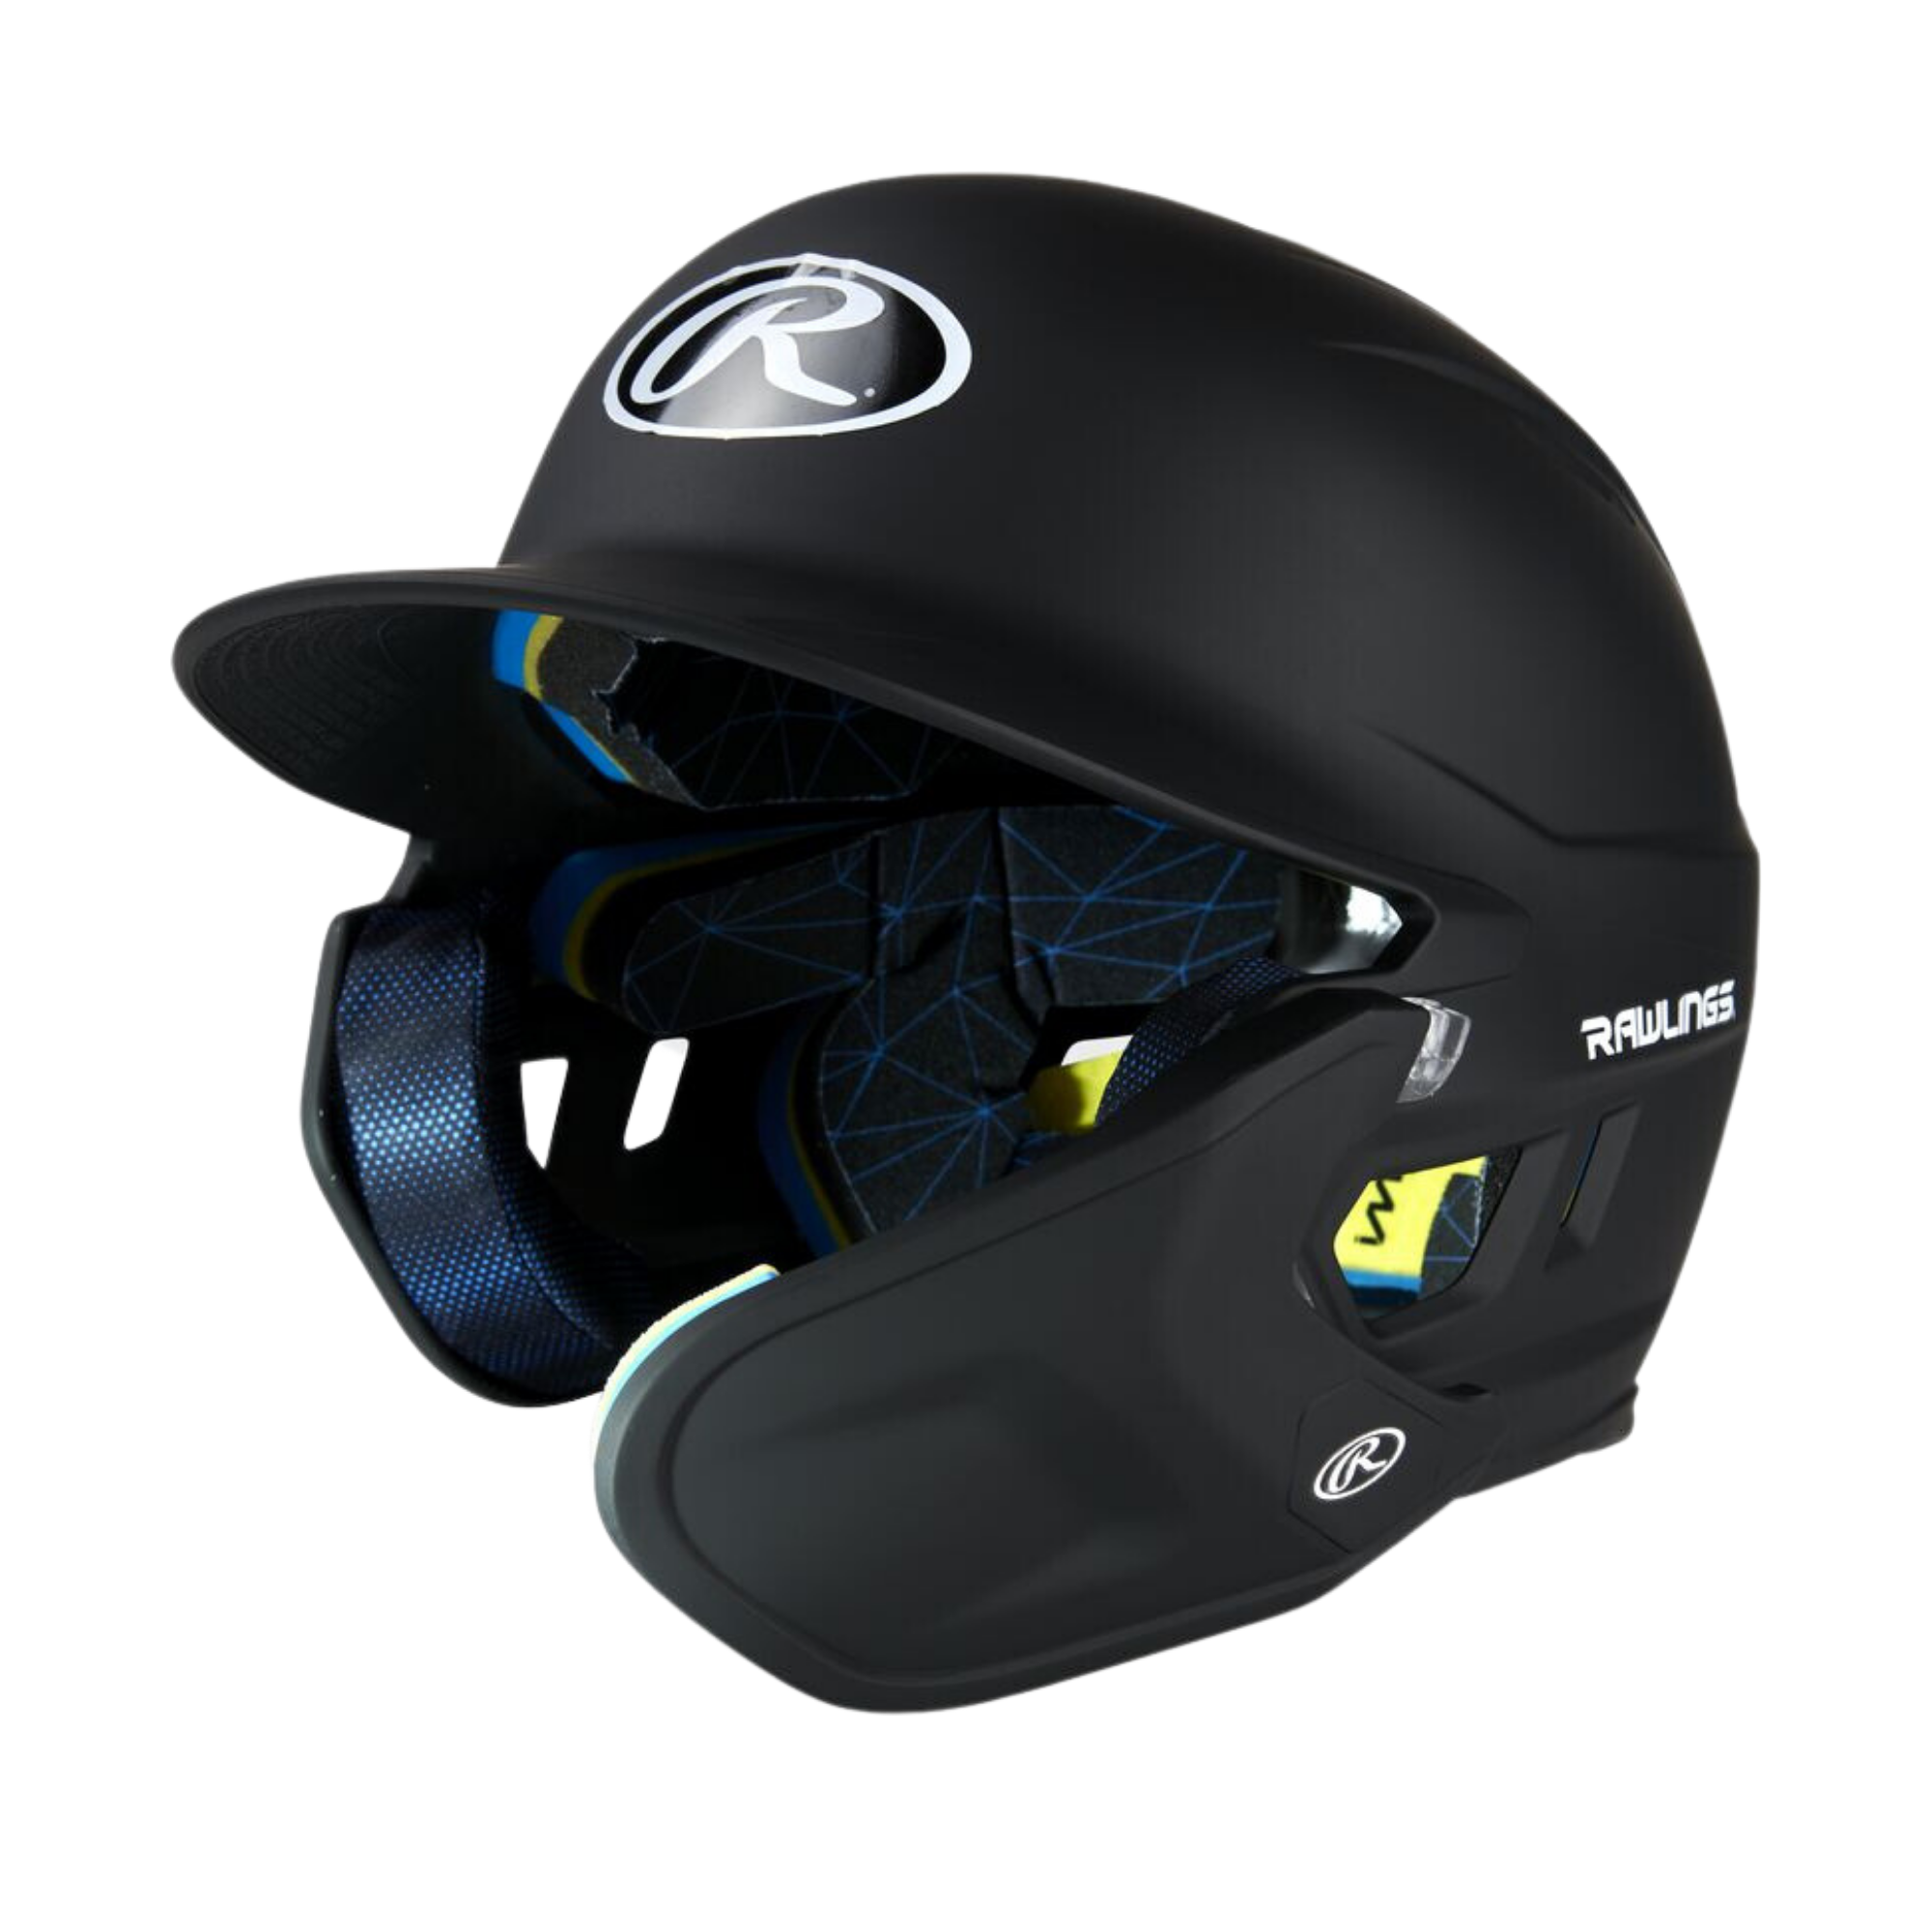 Rawlings Mach Adjust Right Handed Batting Helmet - Senior